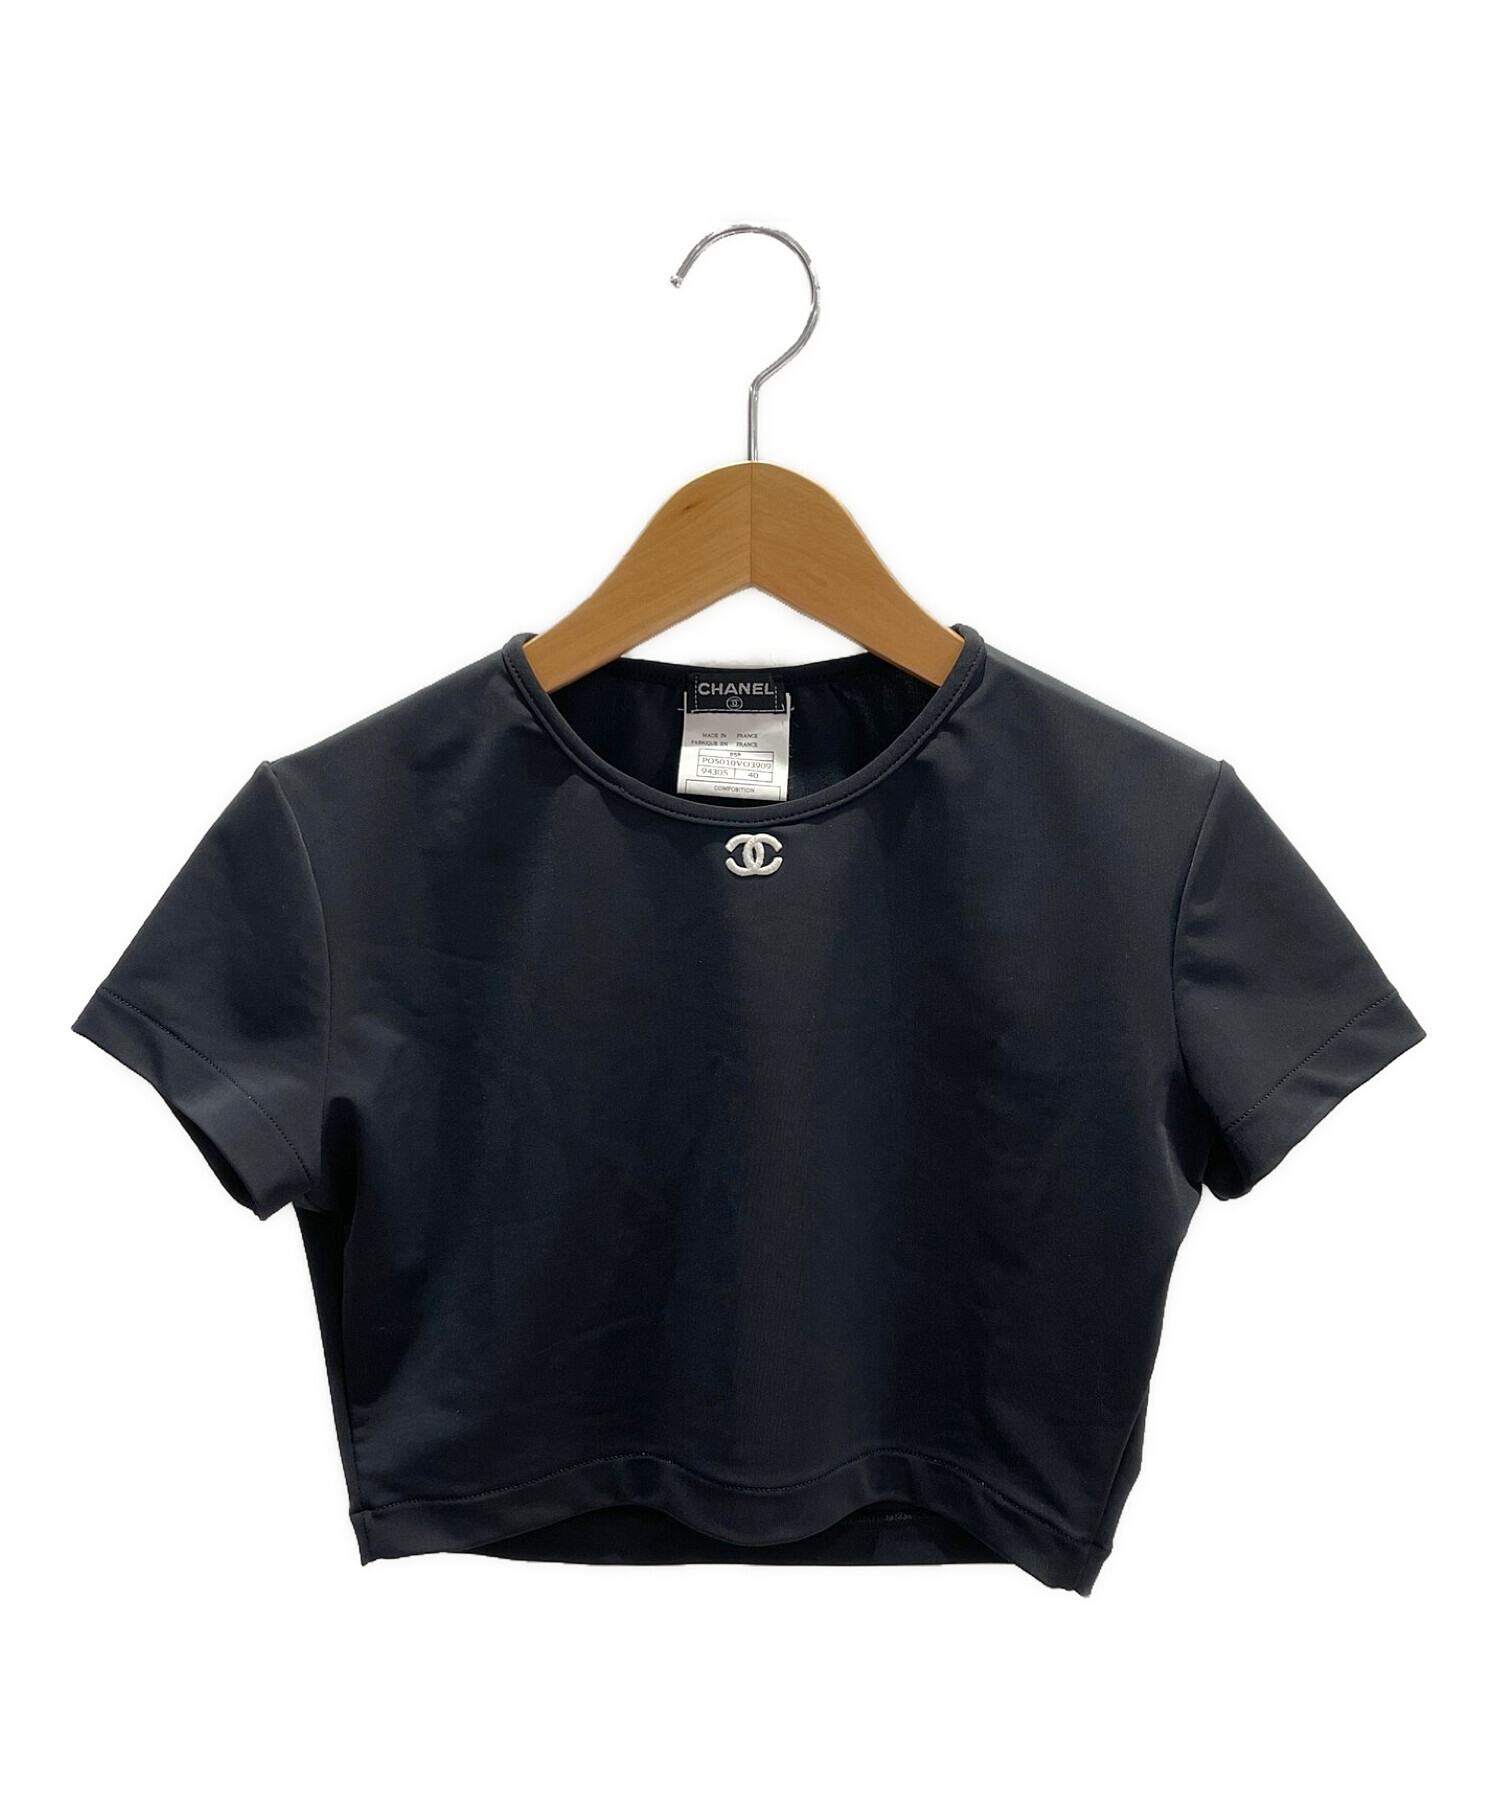 CHANEL (シャネル) エンブロイダリーココマーククロップドTシャツ ブラック サイズ:40